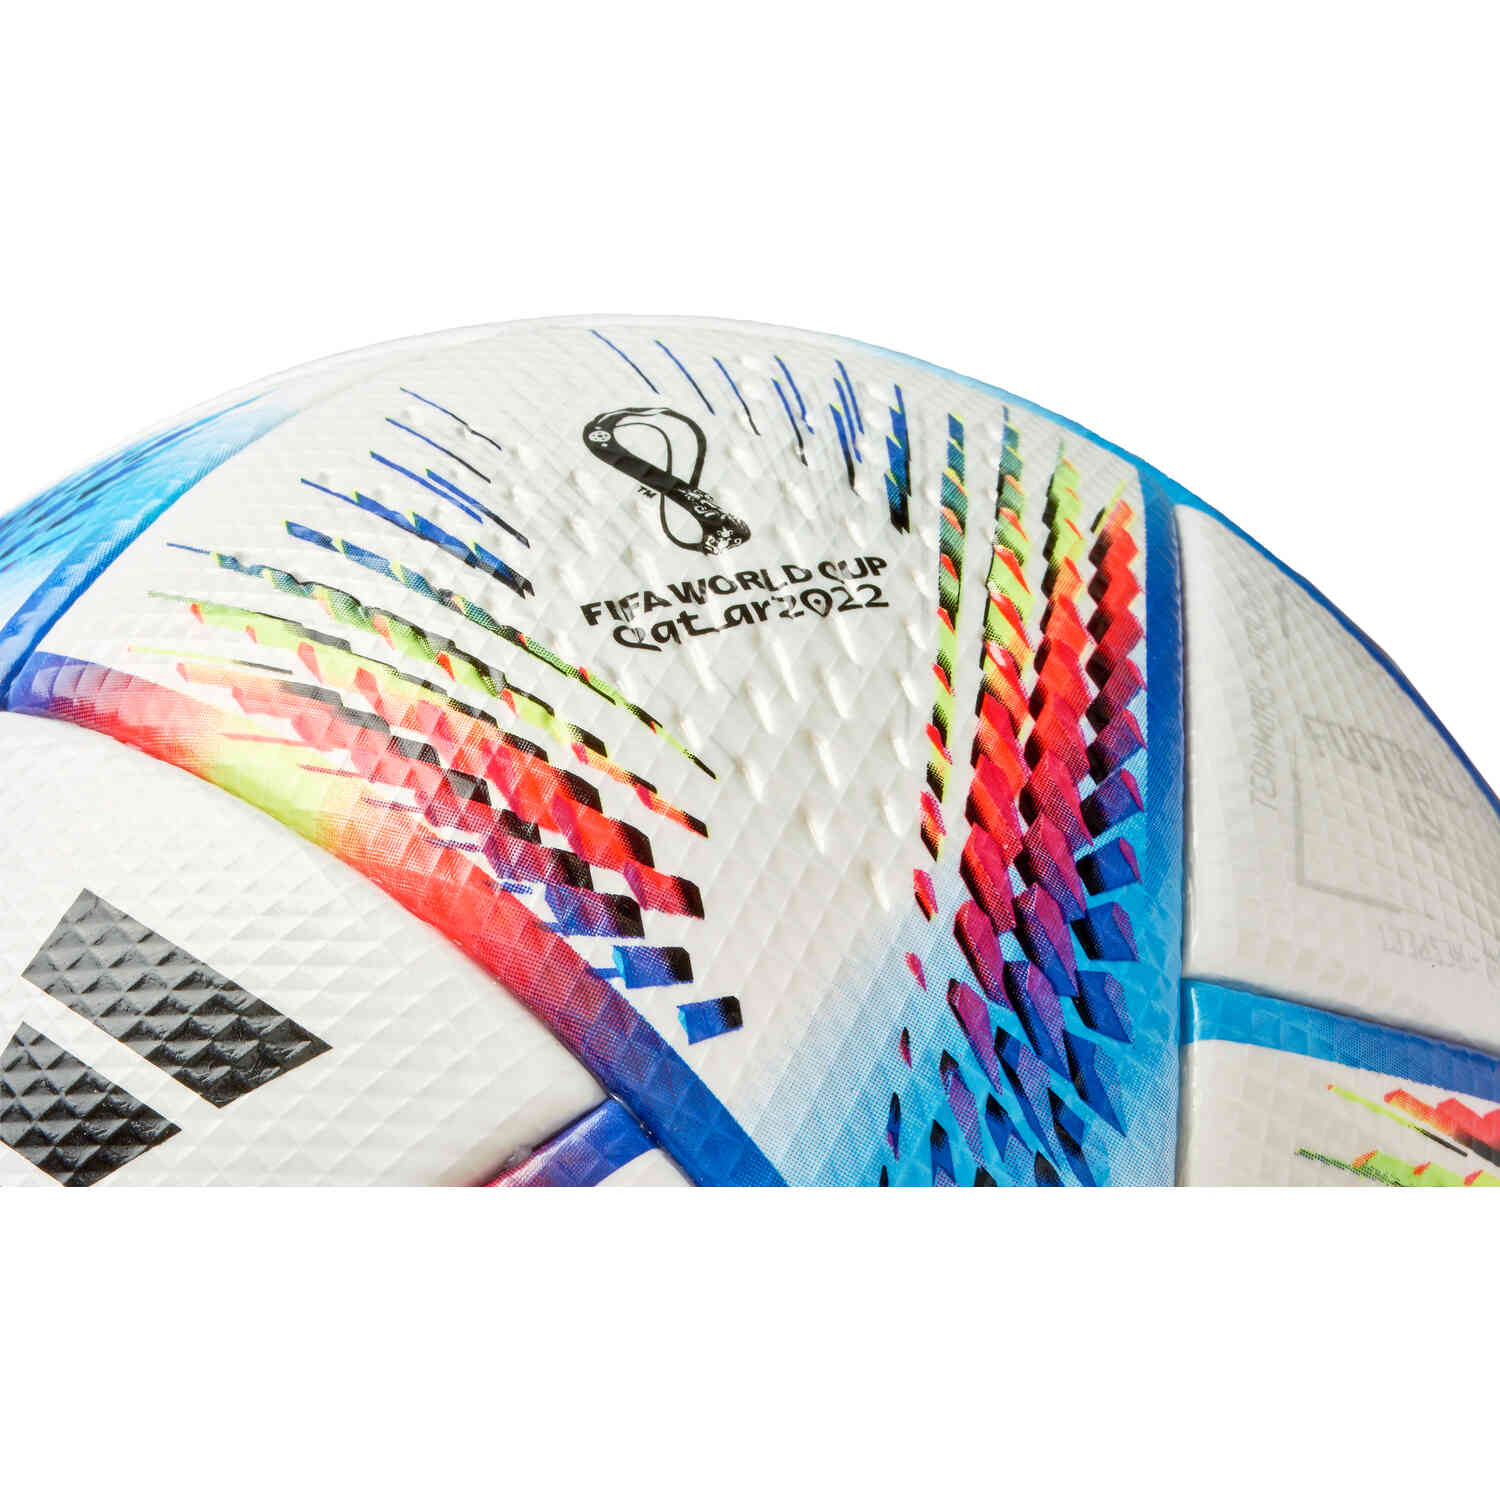 adidas World Cup Al Rihla Pro Official Match Soccer Ball 2022